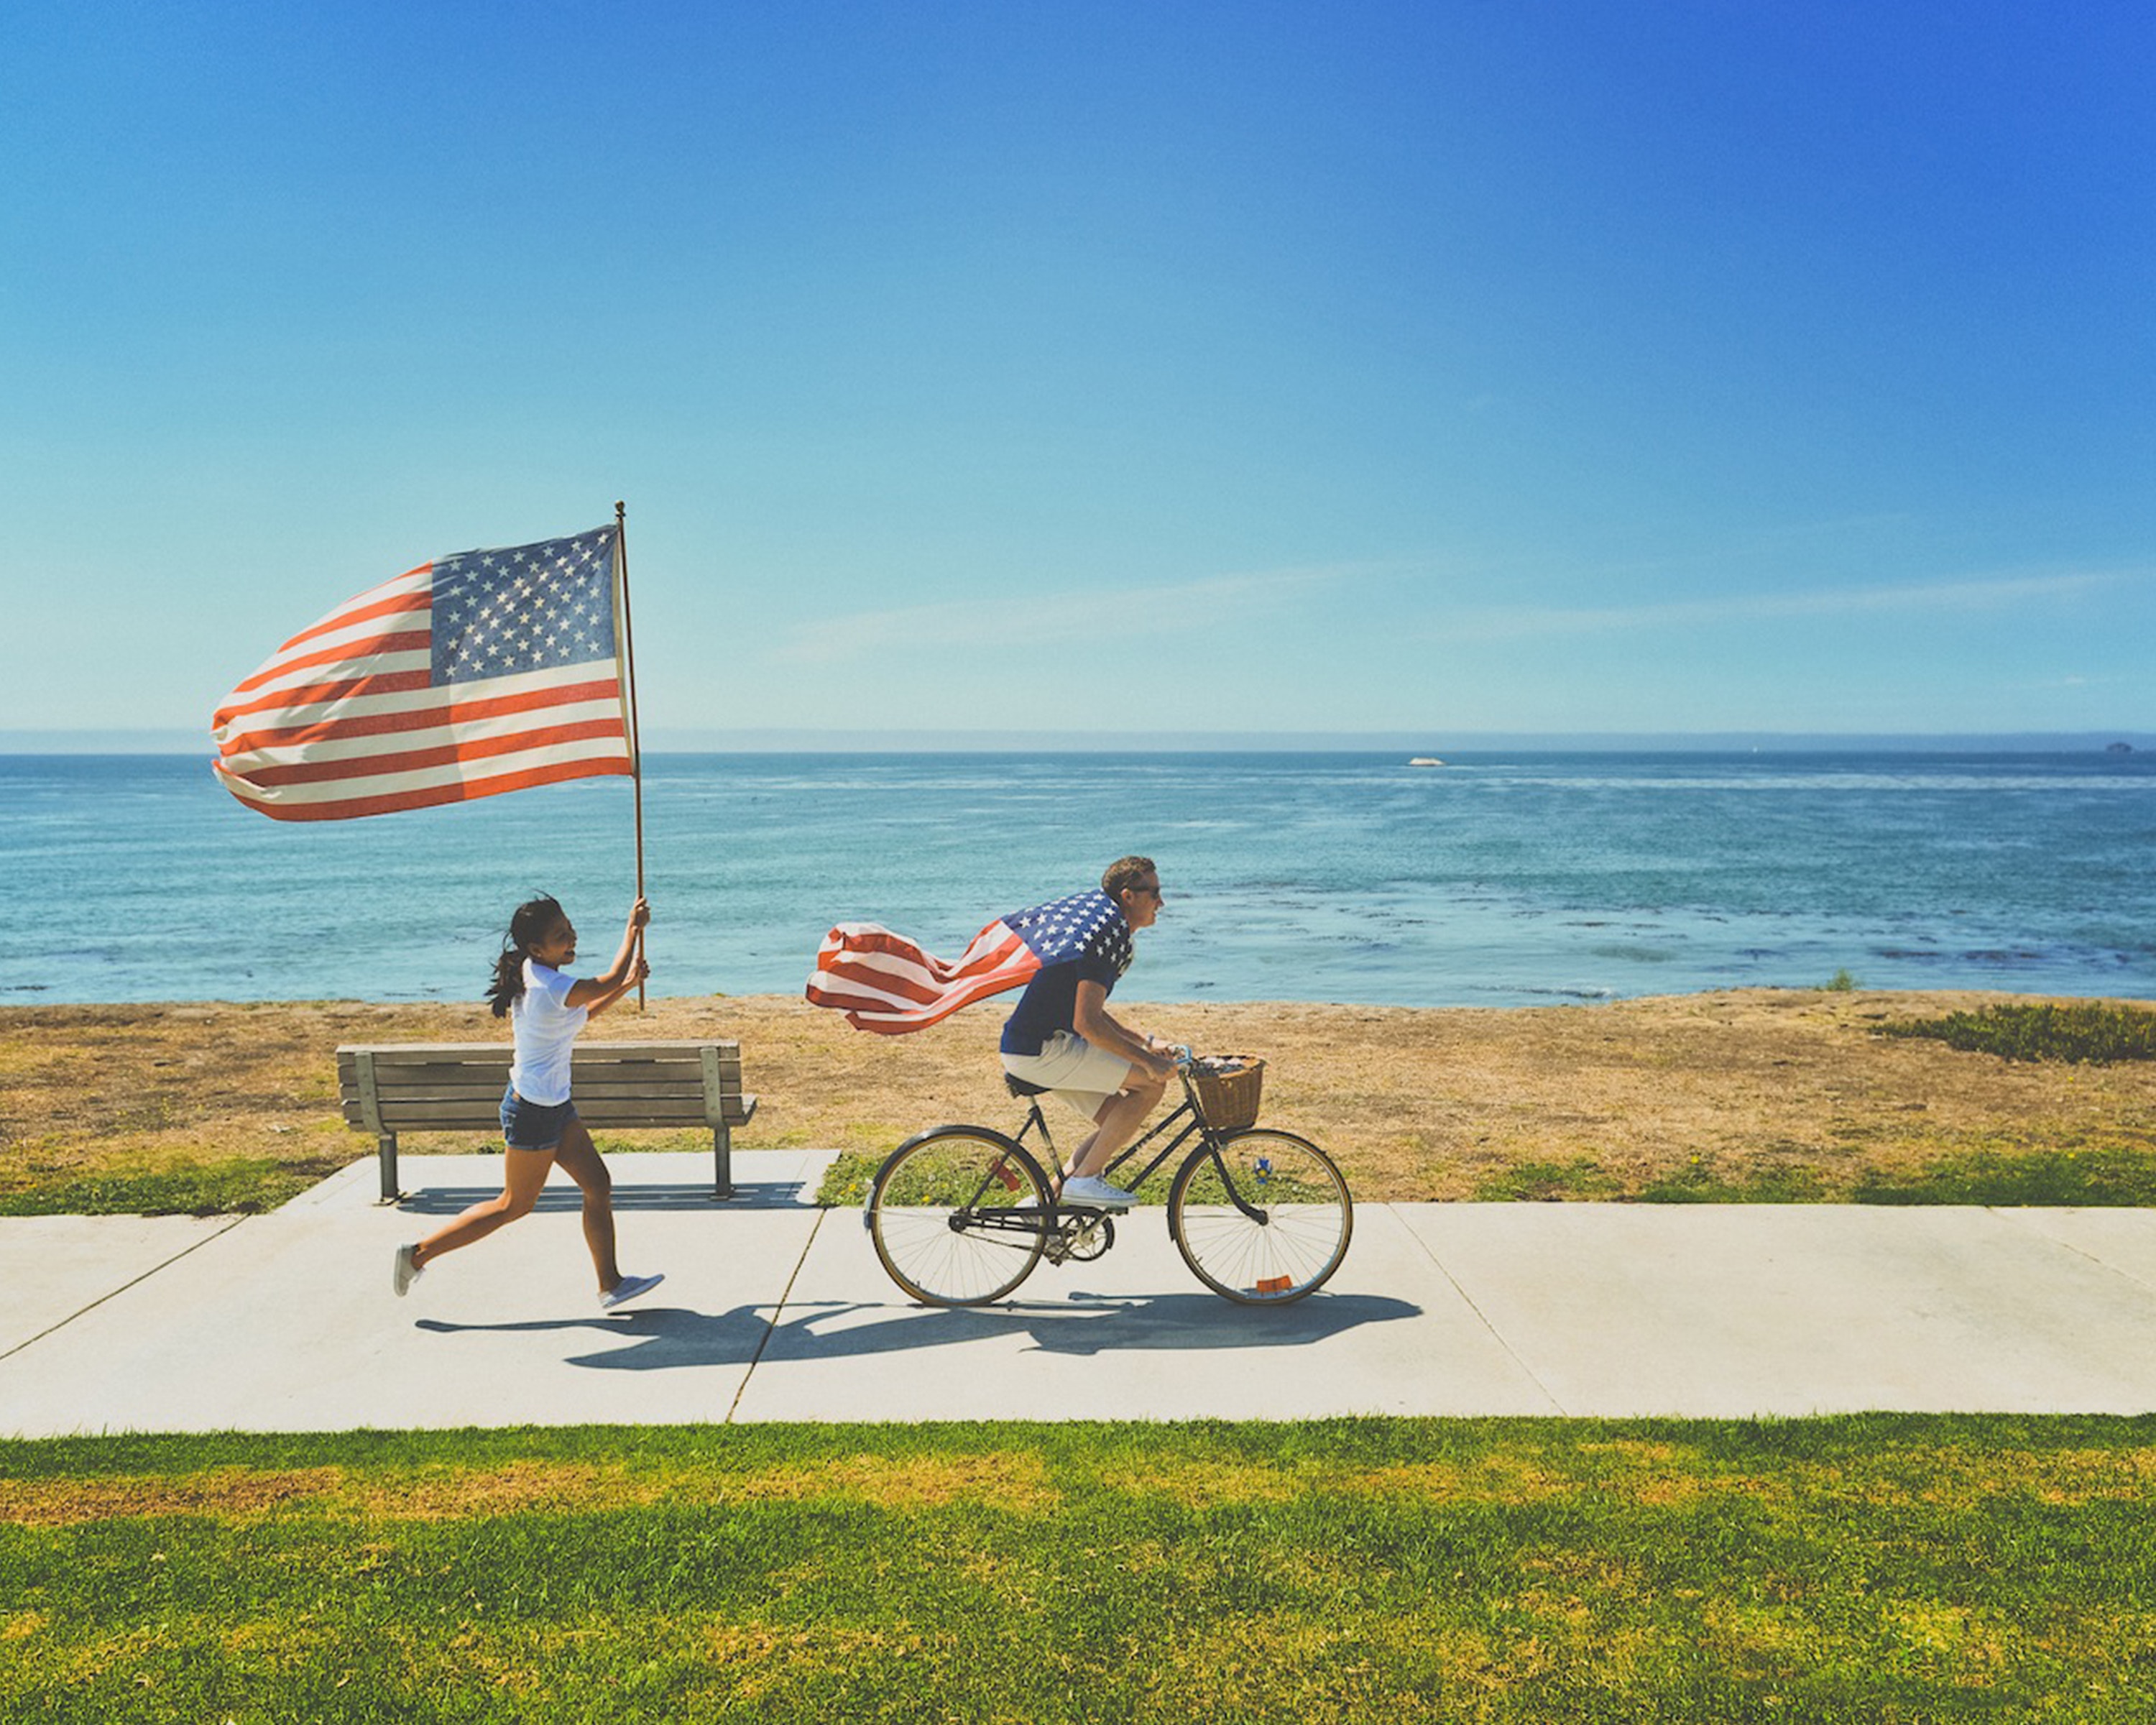 USA Flags , one girl running behind a boy on a bike.